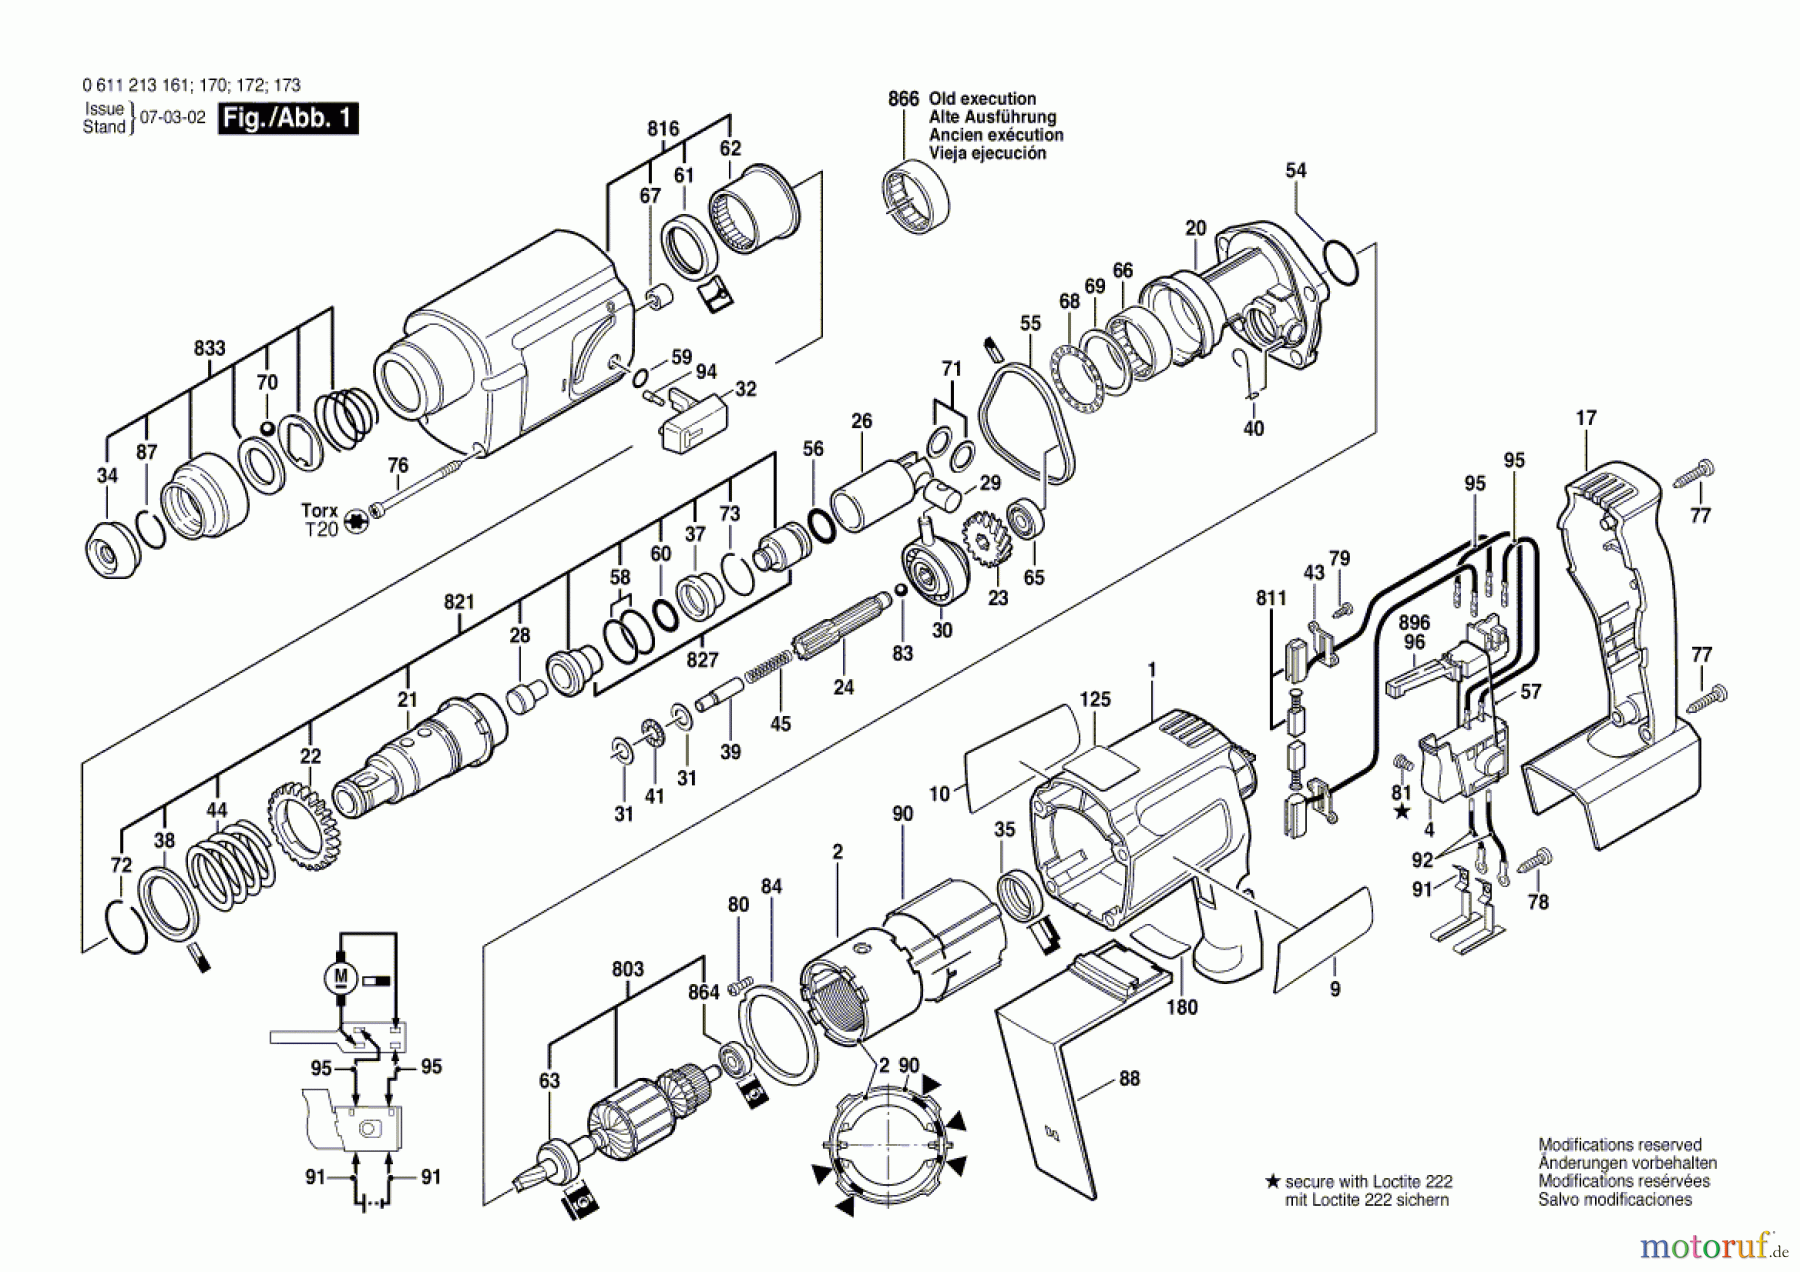  Bosch Akku Werkzeug Gw-Akku-Bohrhammer 324 V Seite 1